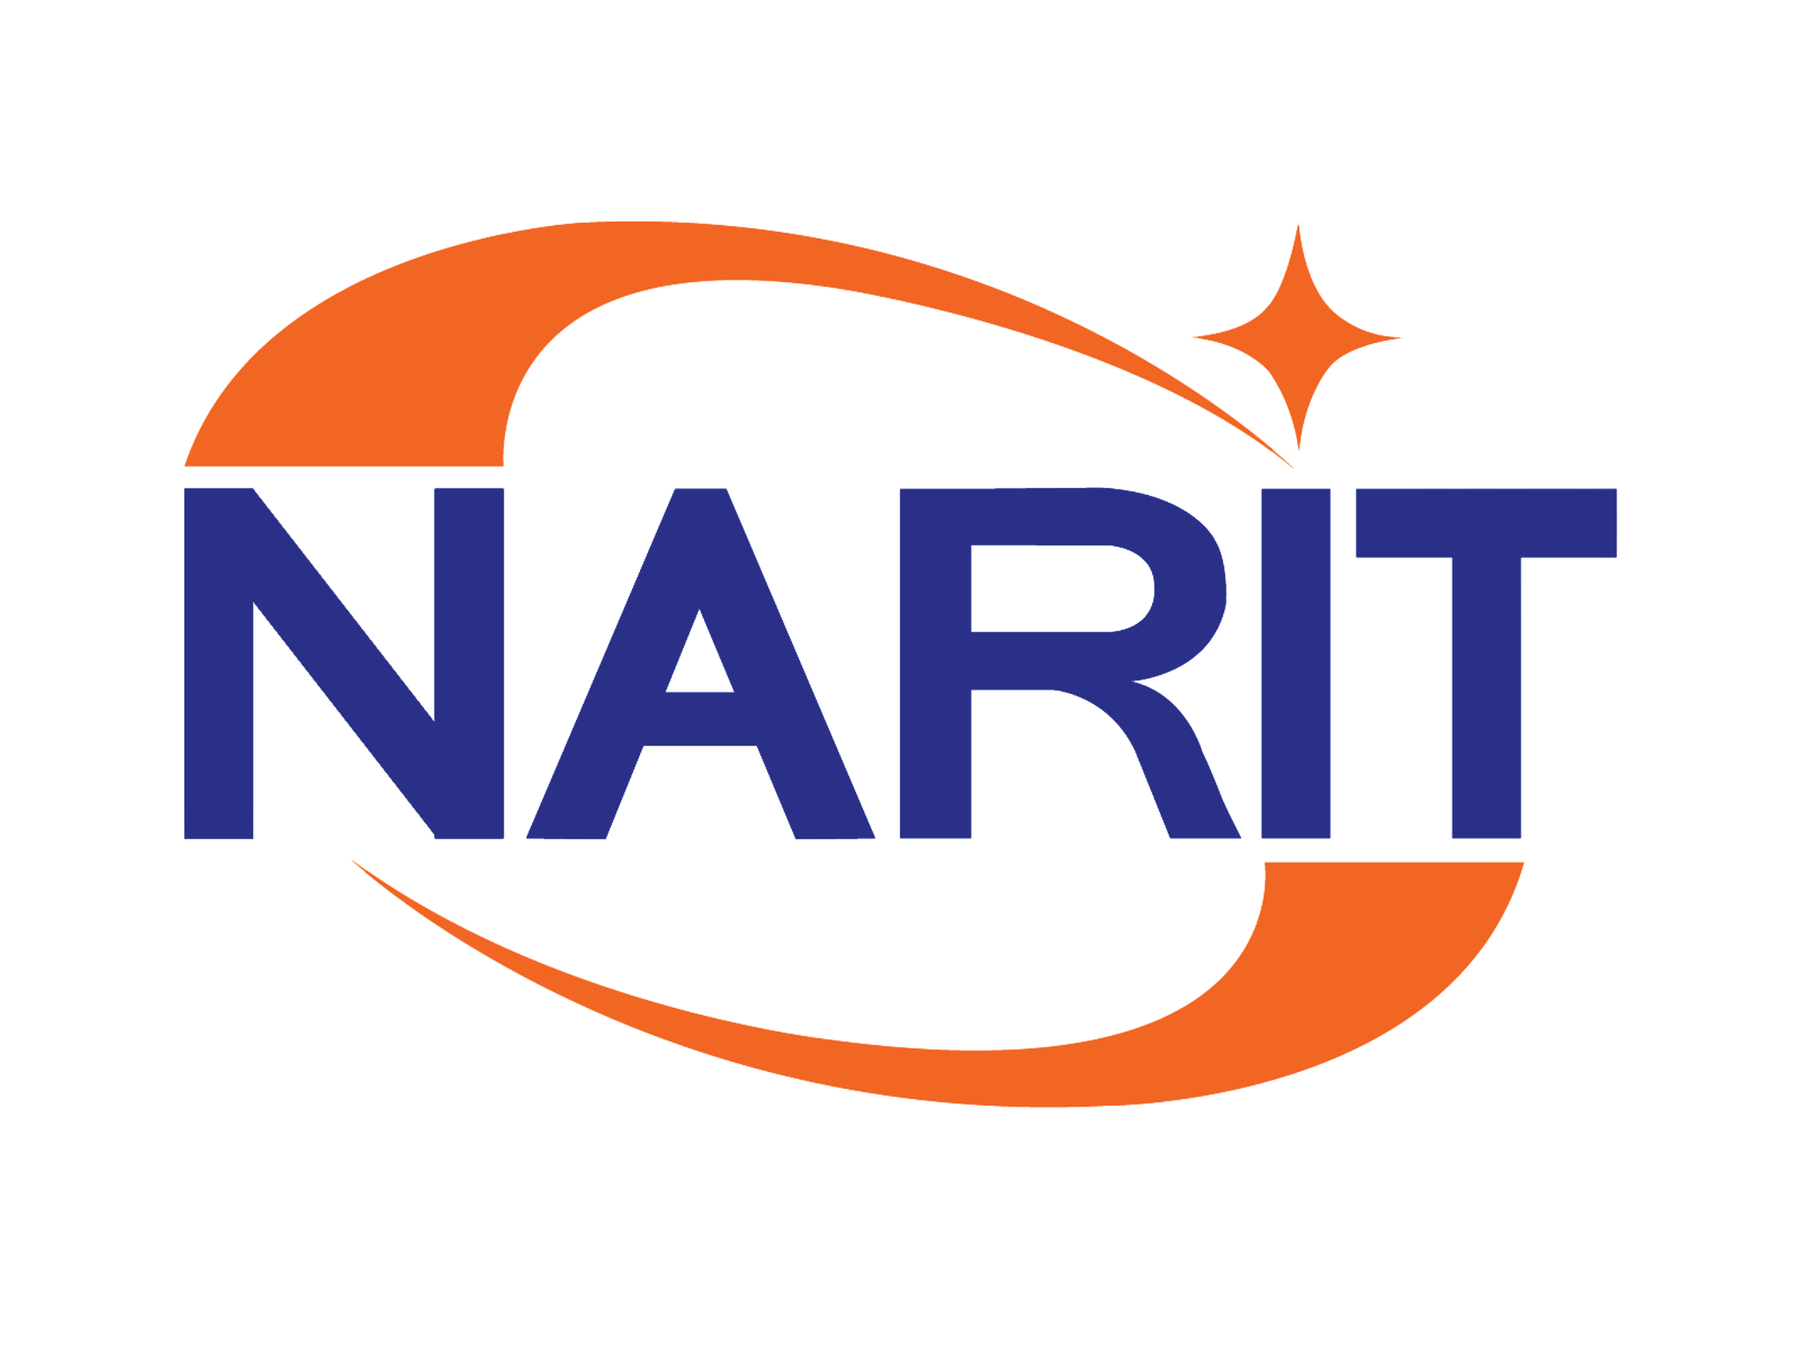 Logo NARIT